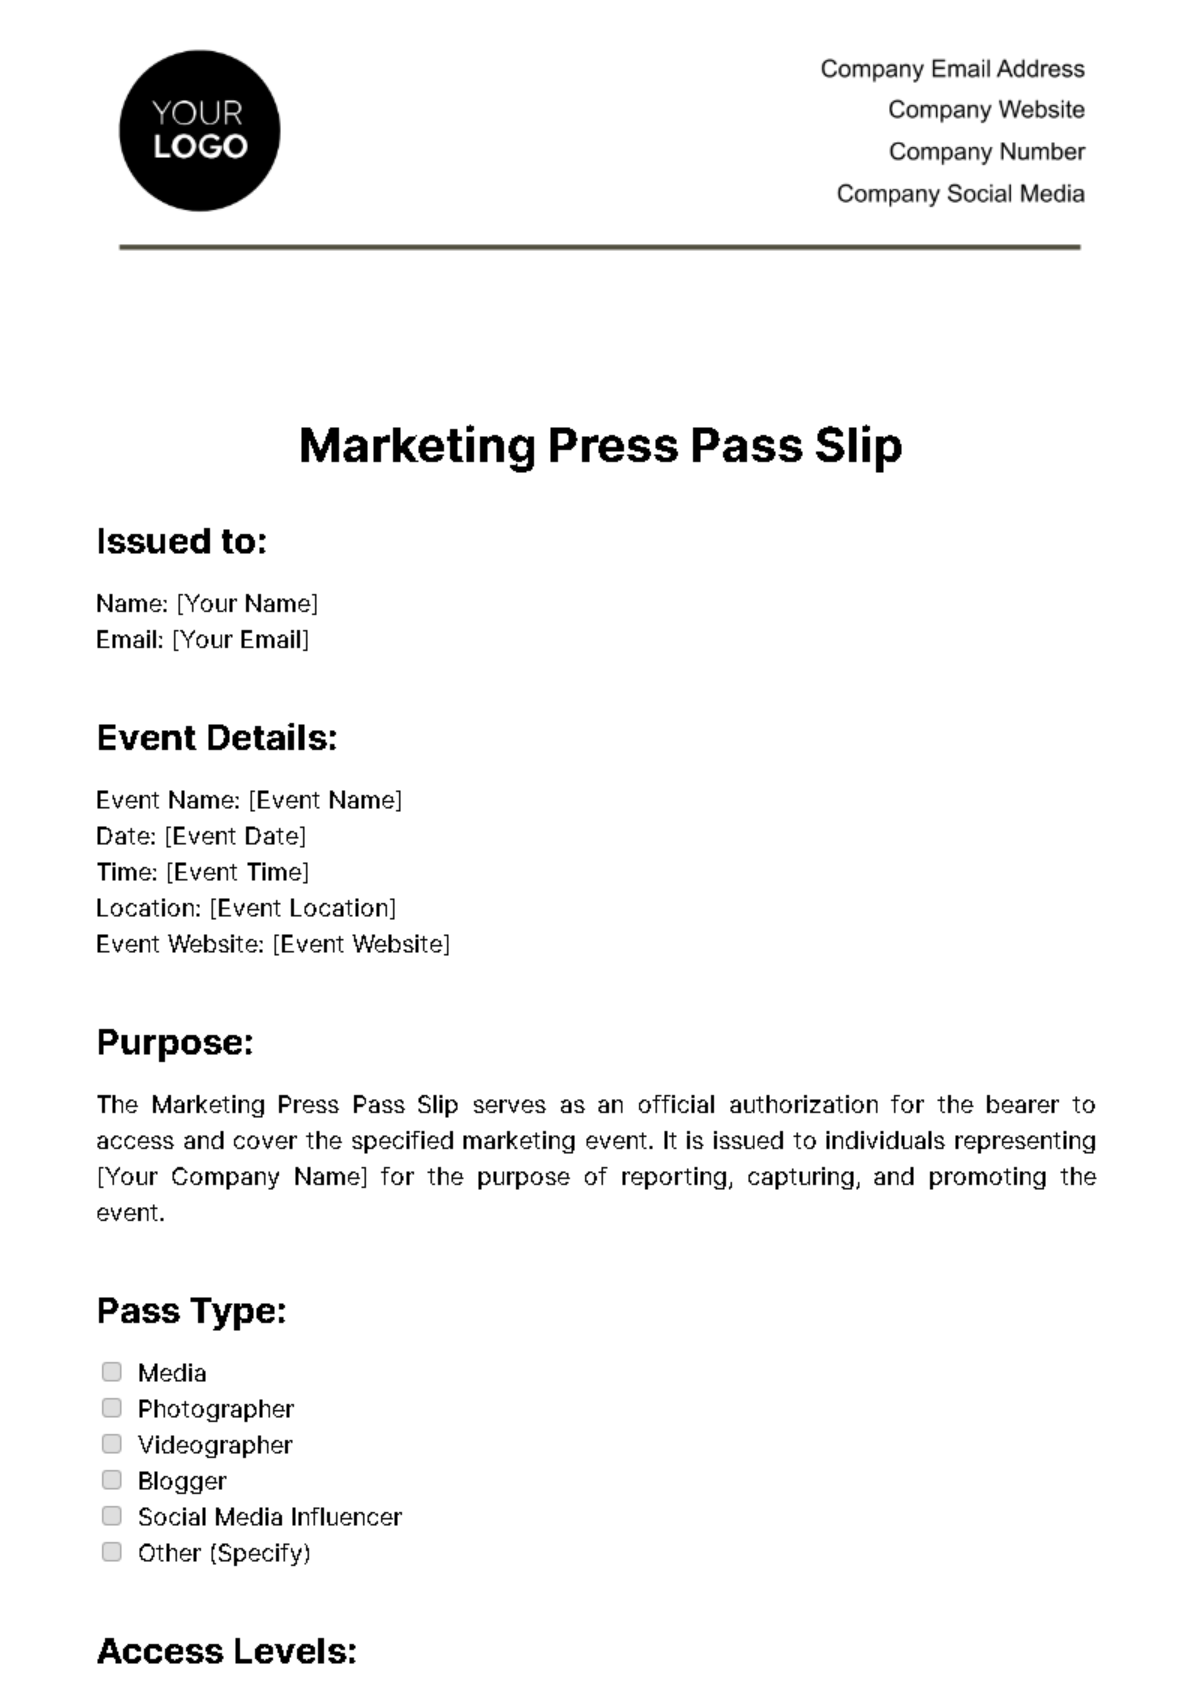 Marketing Press Pass Slip Template